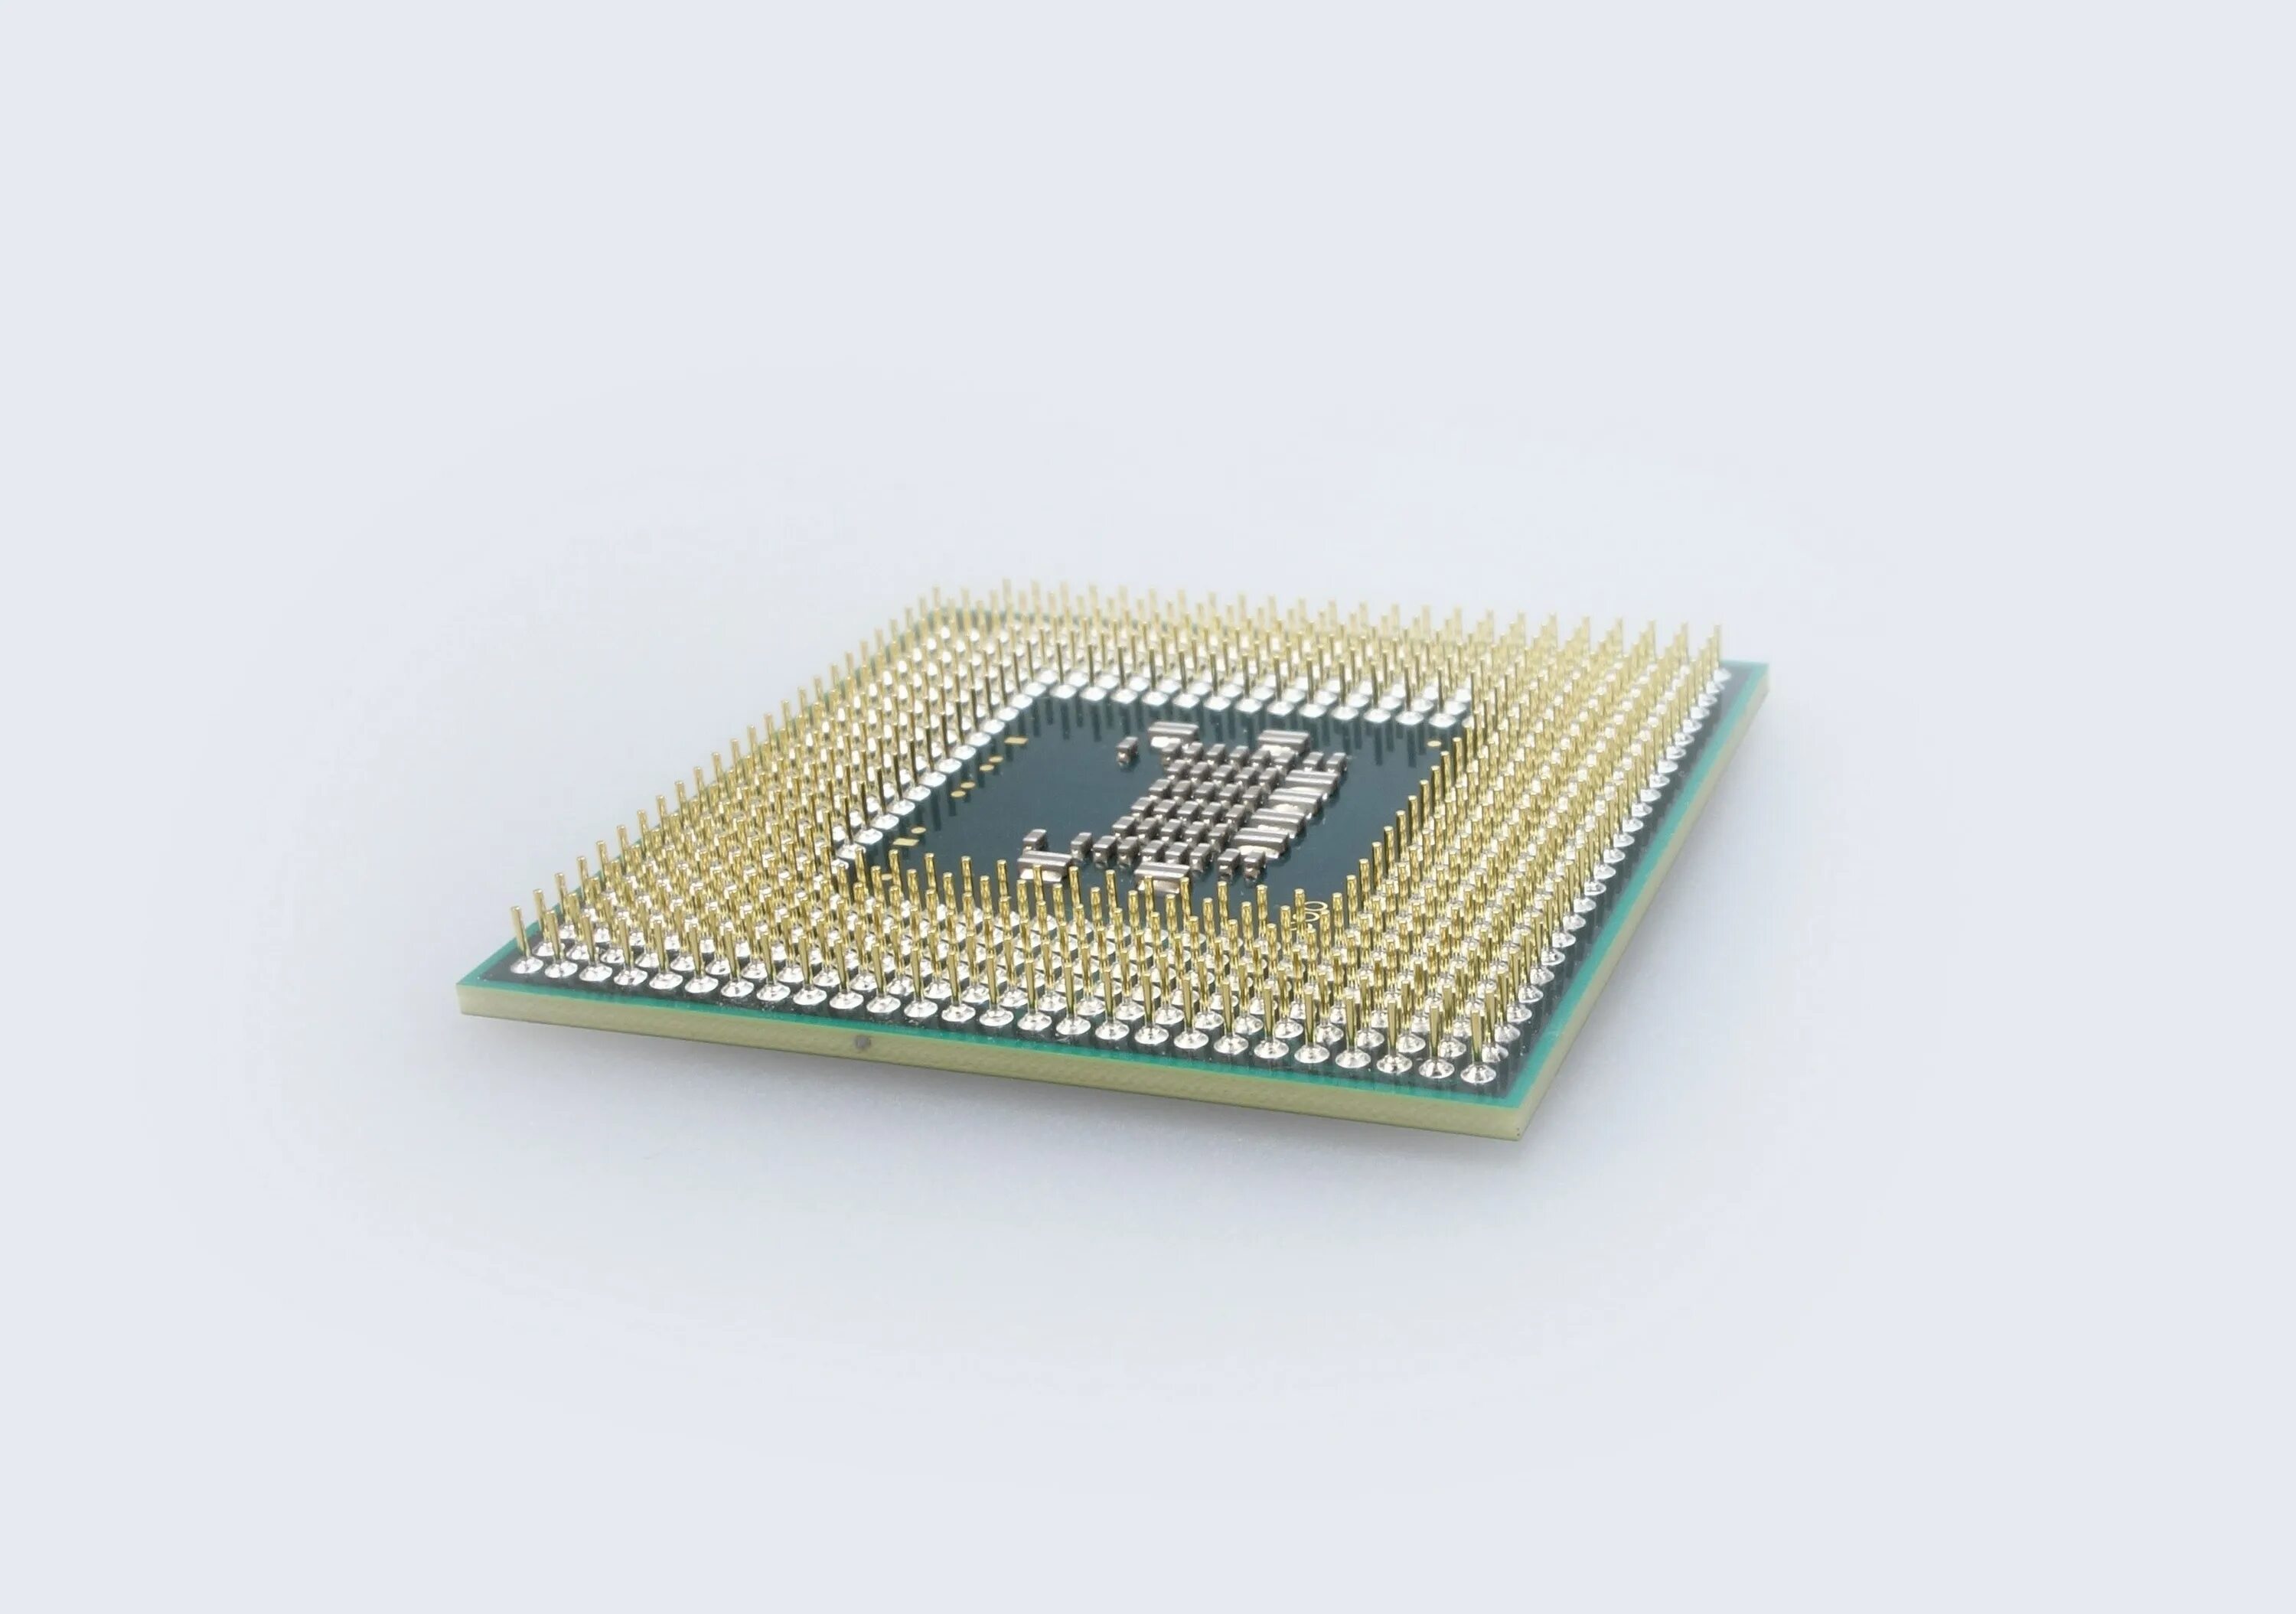 Процессор (CPU) микропроцессор. Микропроцессор Интел. Чип процессора Интел. Microprocessor Intel pd0051. Process процессор